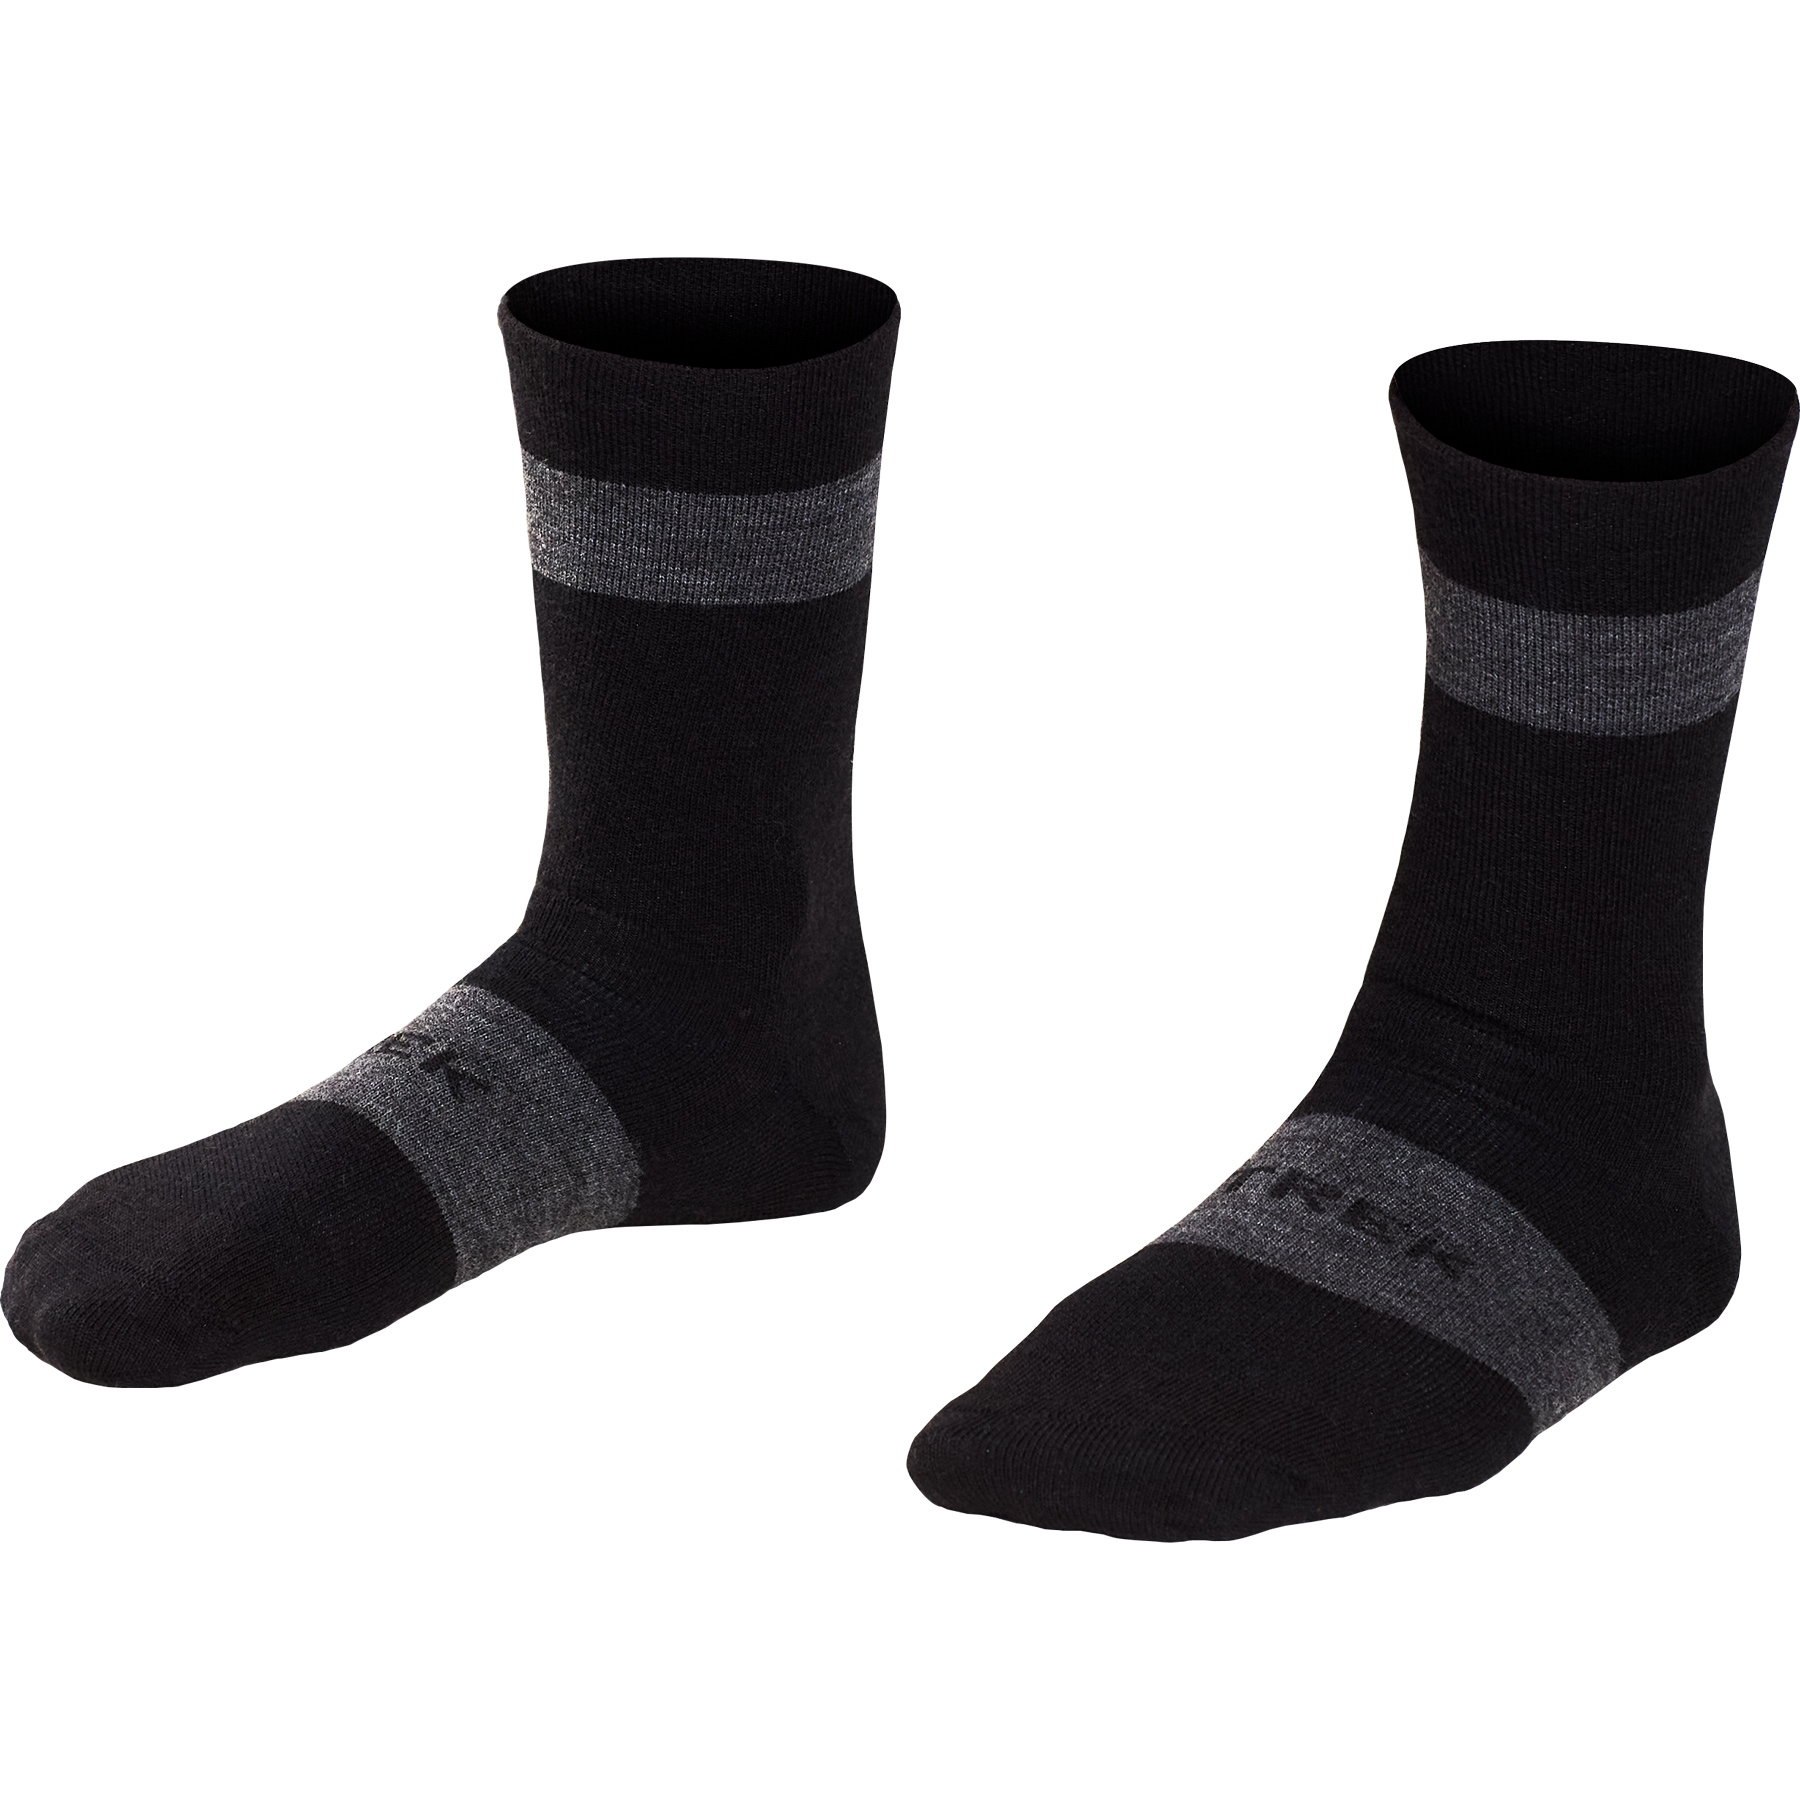 Image of Trek Race Crew Merino Wool Cycling Socks - Black